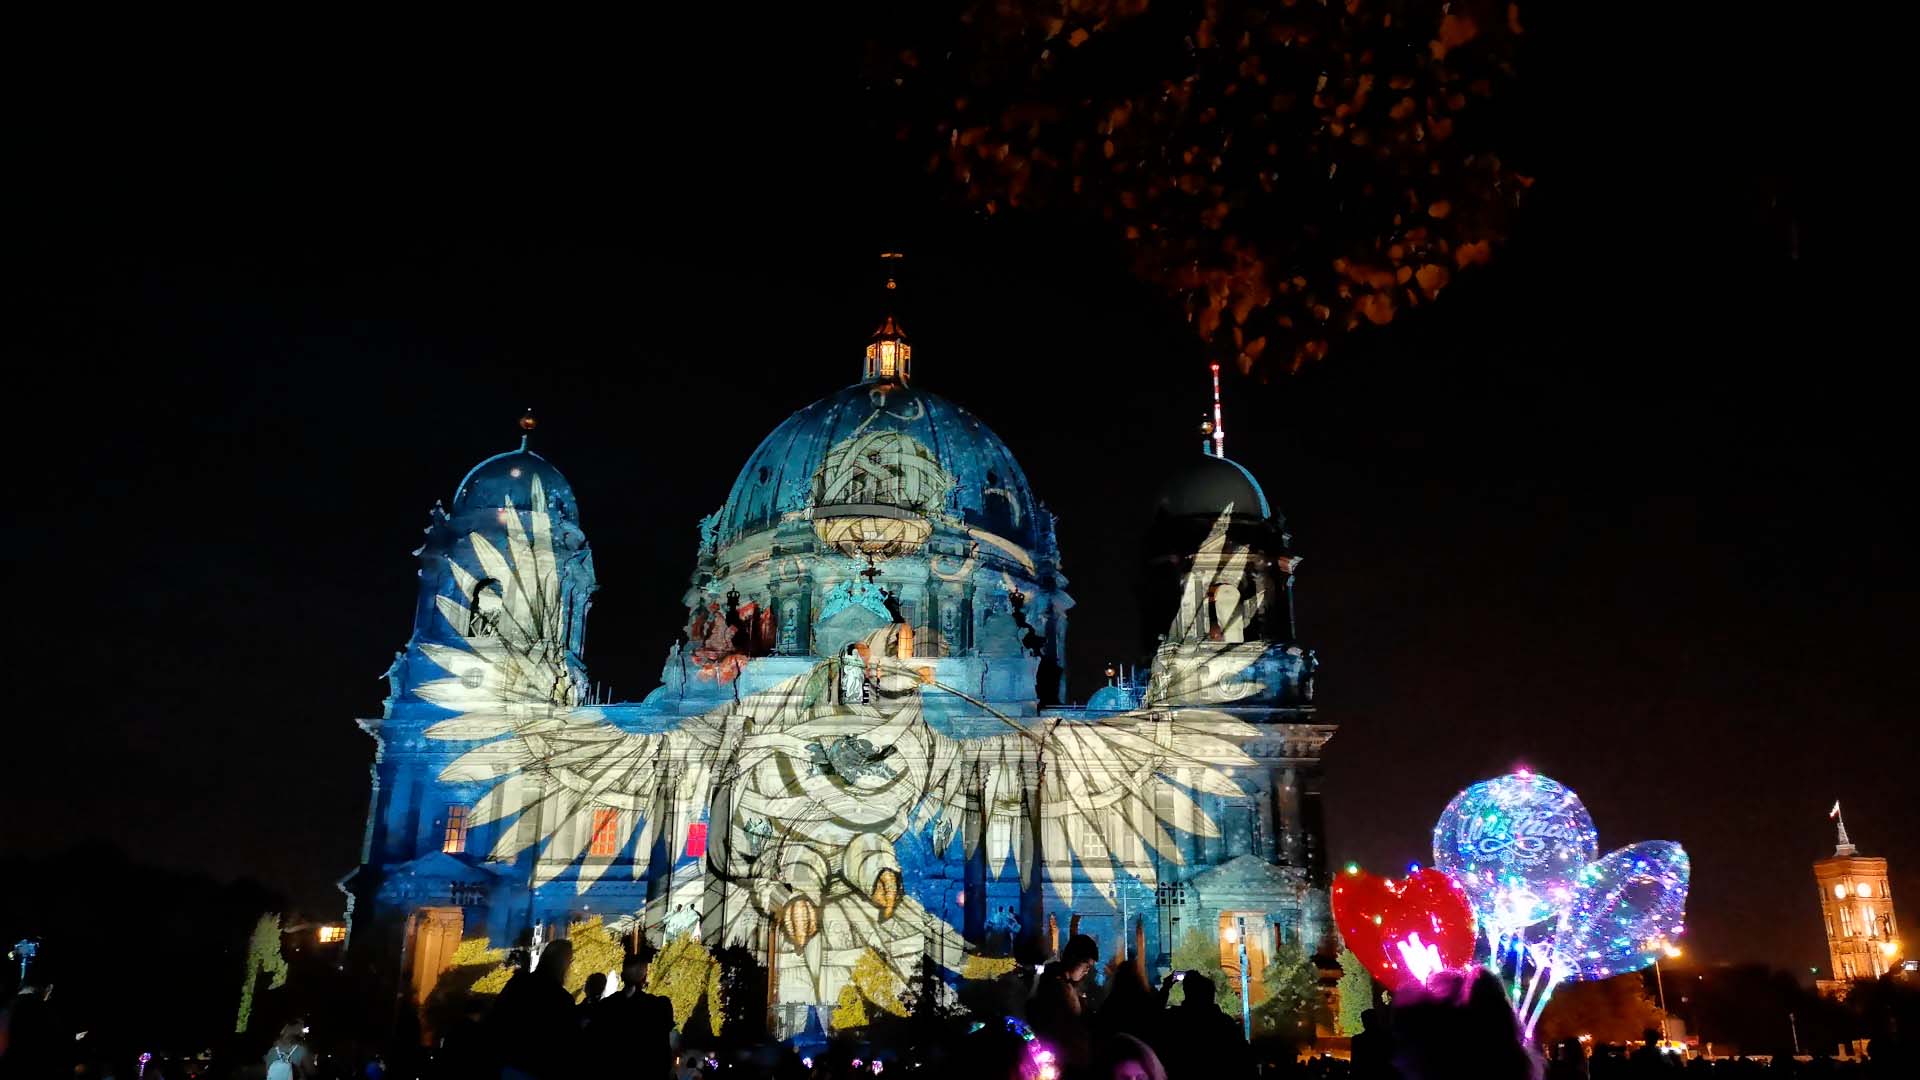 Festival of Lights, Berliner Dom